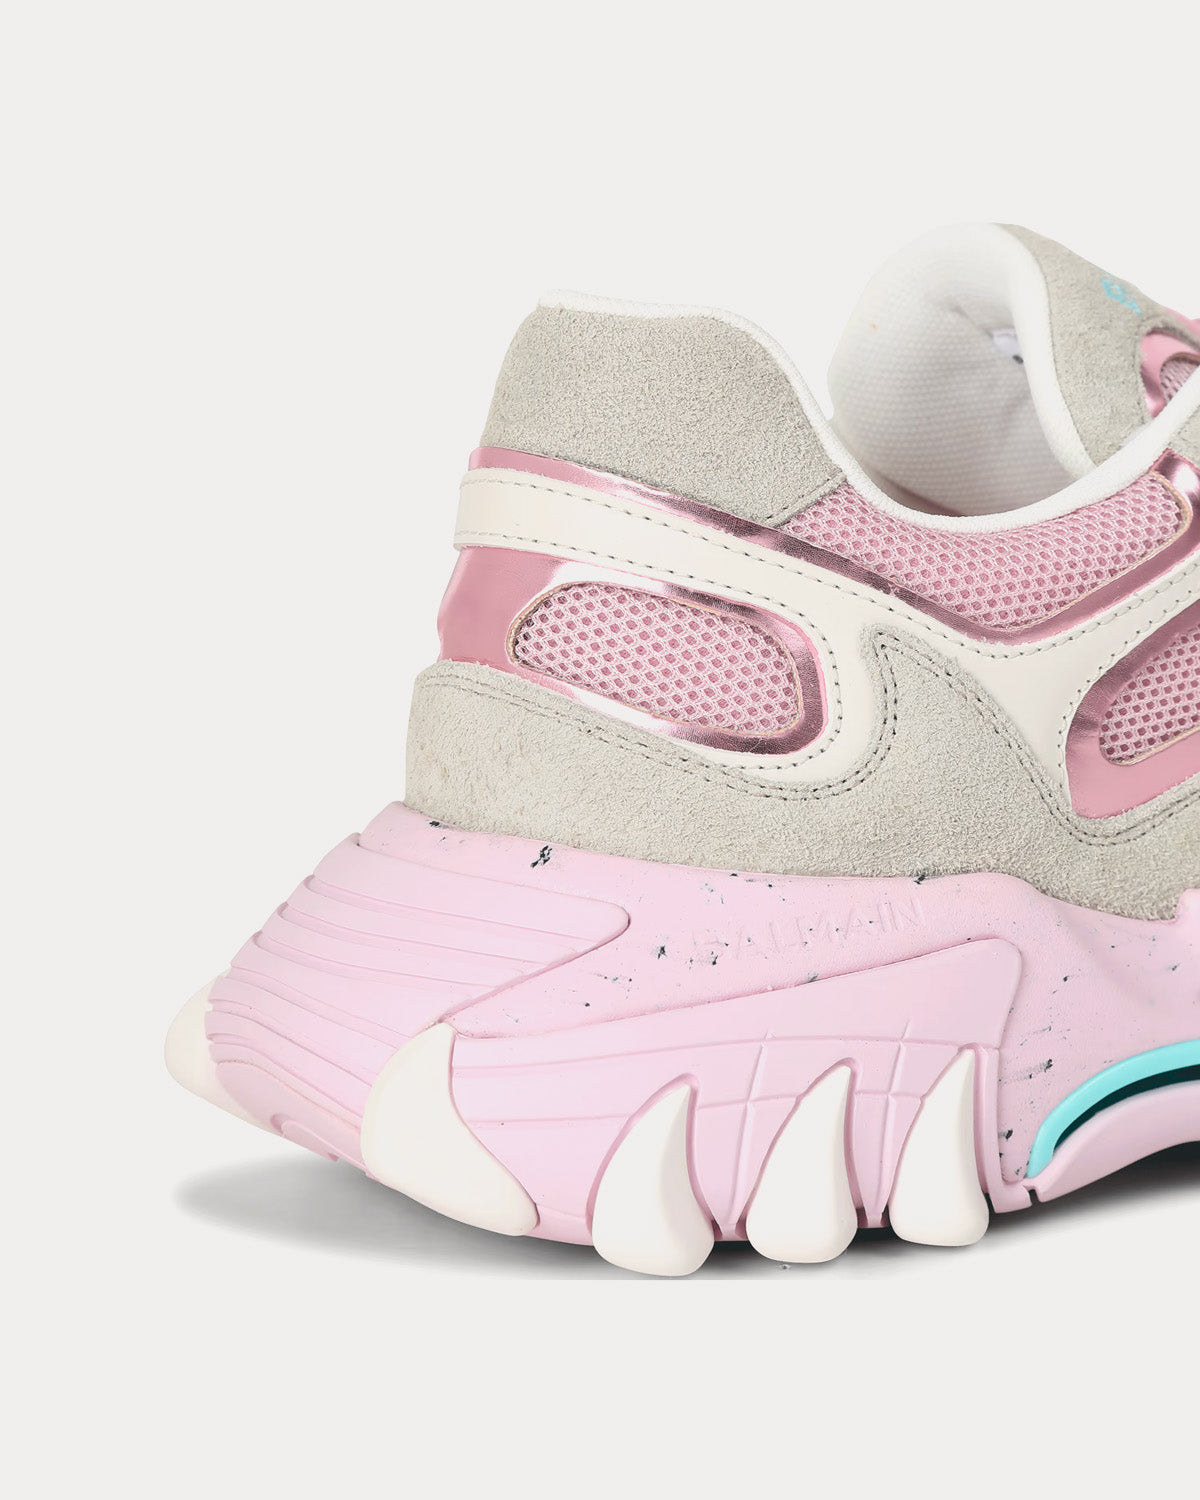 Balmain - B-East Leather & Mesh Pink Low Top Sneakers